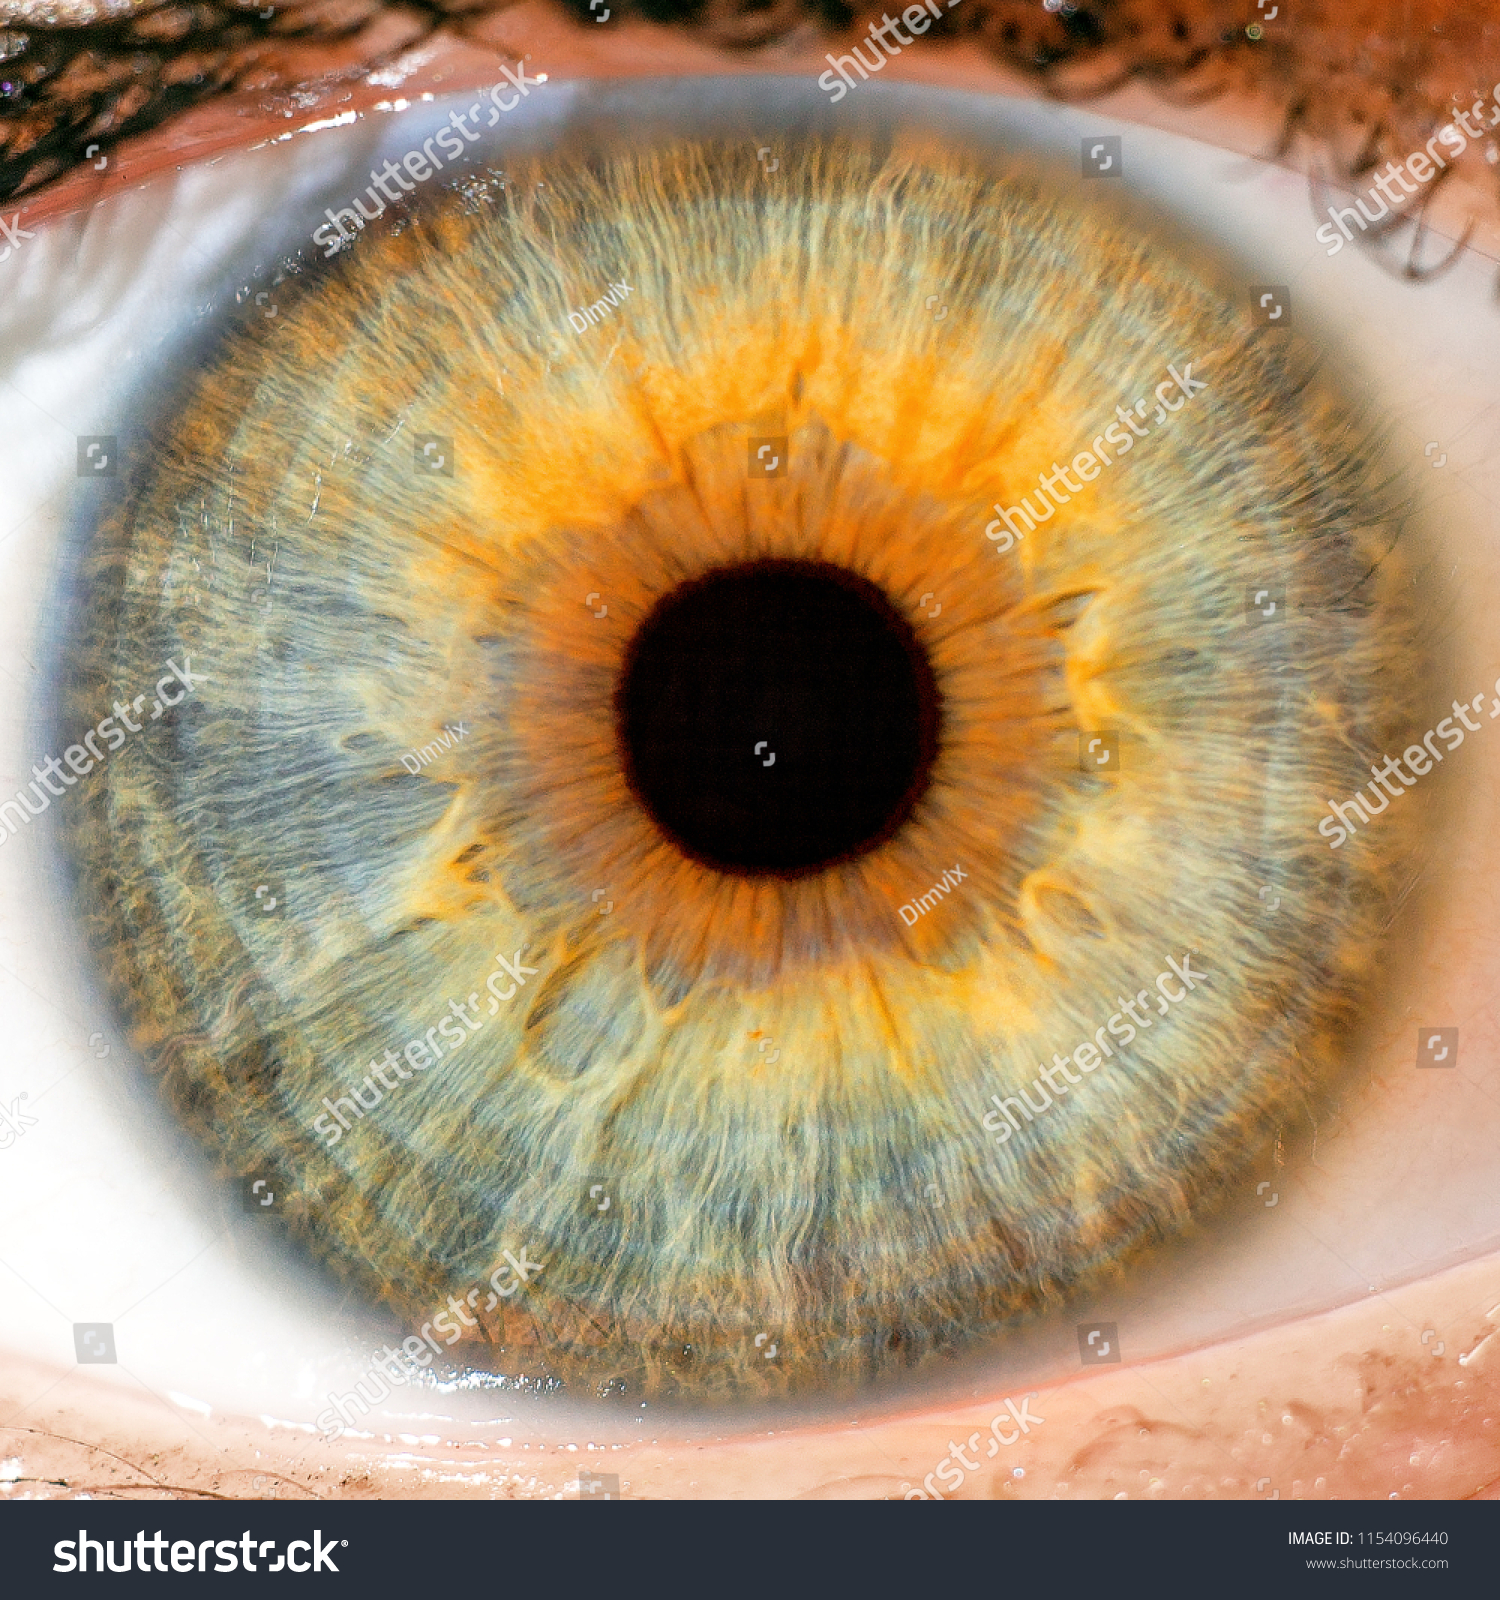 Download Macro Blue Yellow Eyes Iris Pupil The Arts Stock Image 1154096440 PSD Mockup Templates